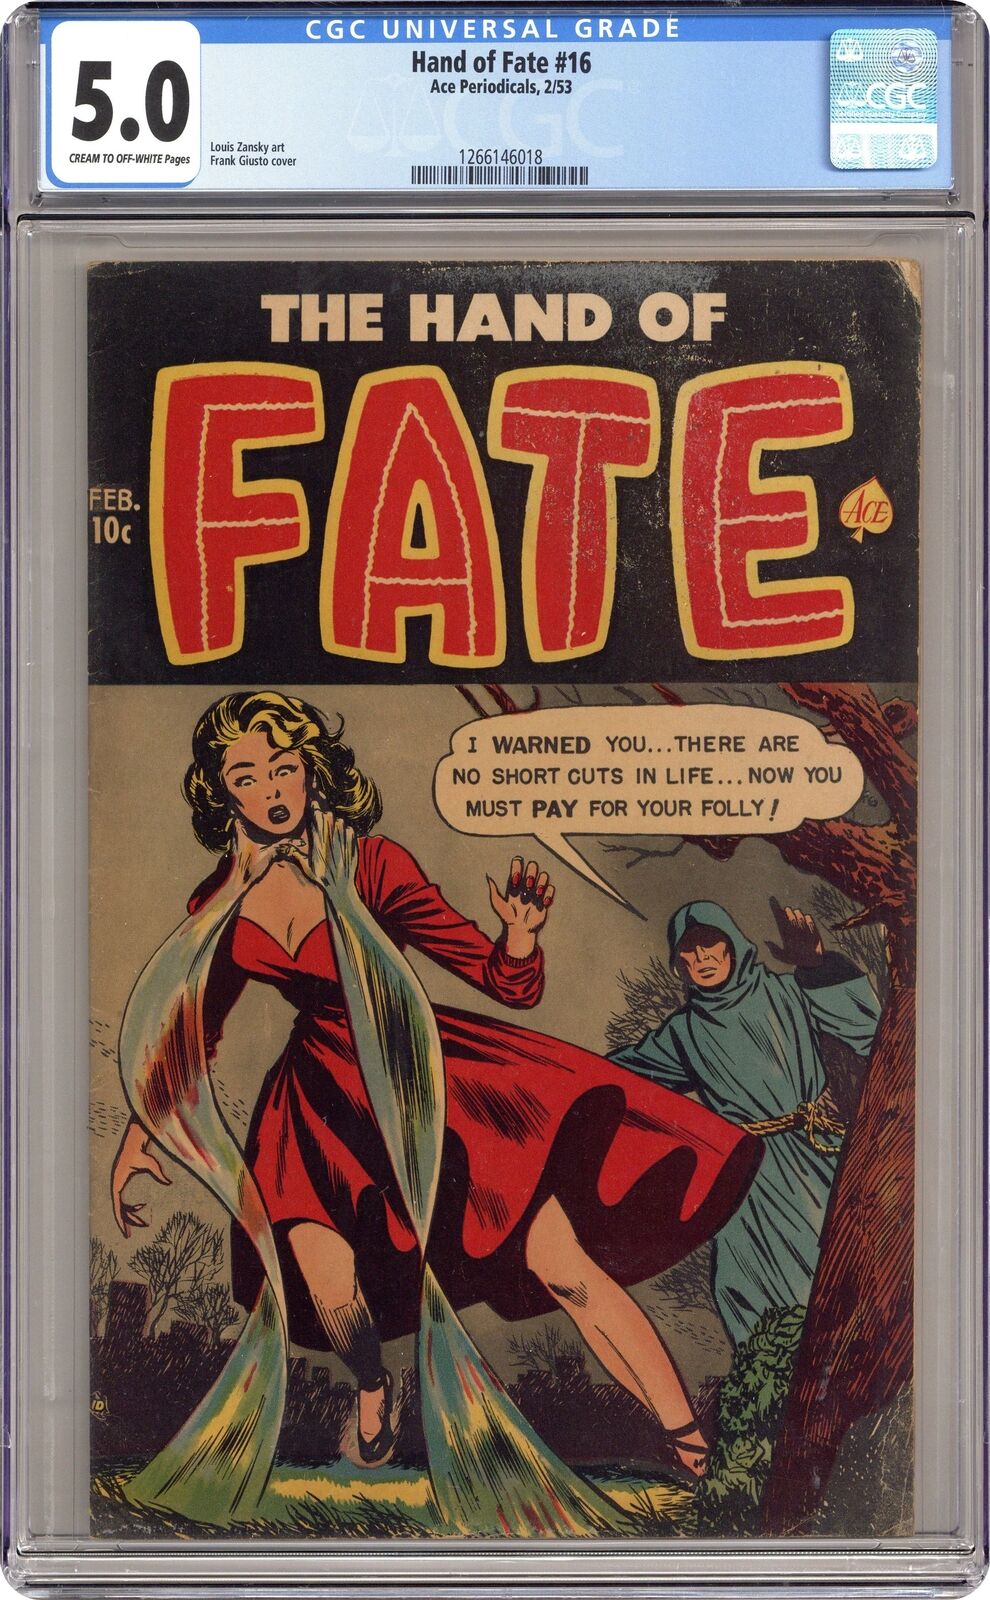 Hand of Fate #16 CGC 5.0 1953 1266146018